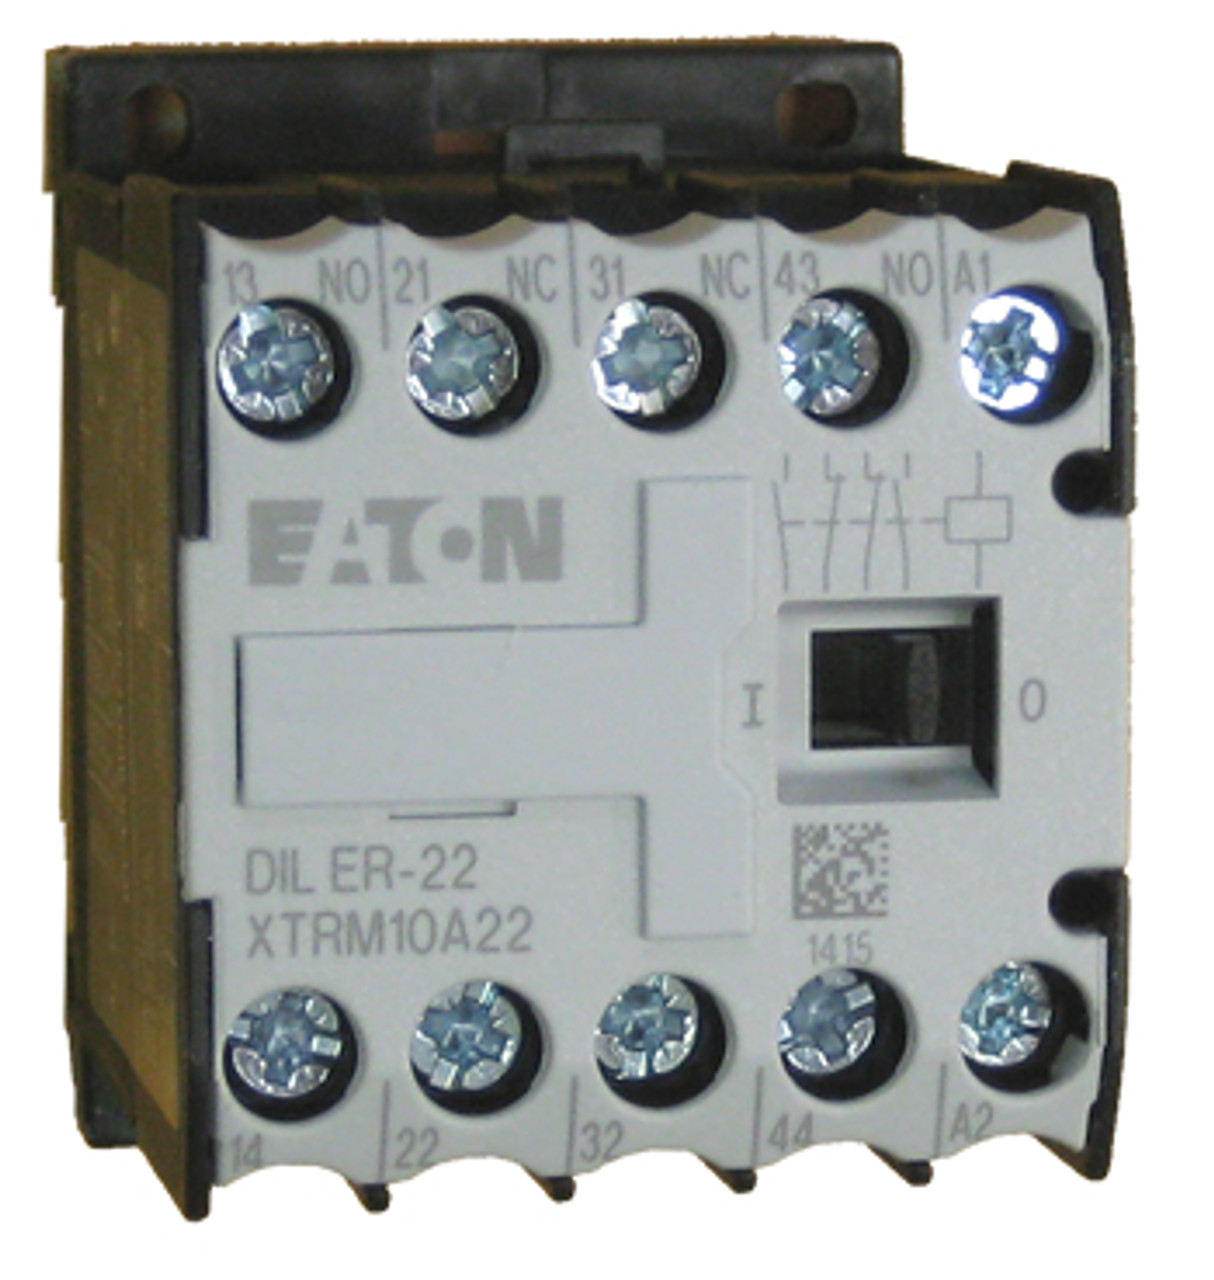 Eaton XTRM10A22H miniature relay